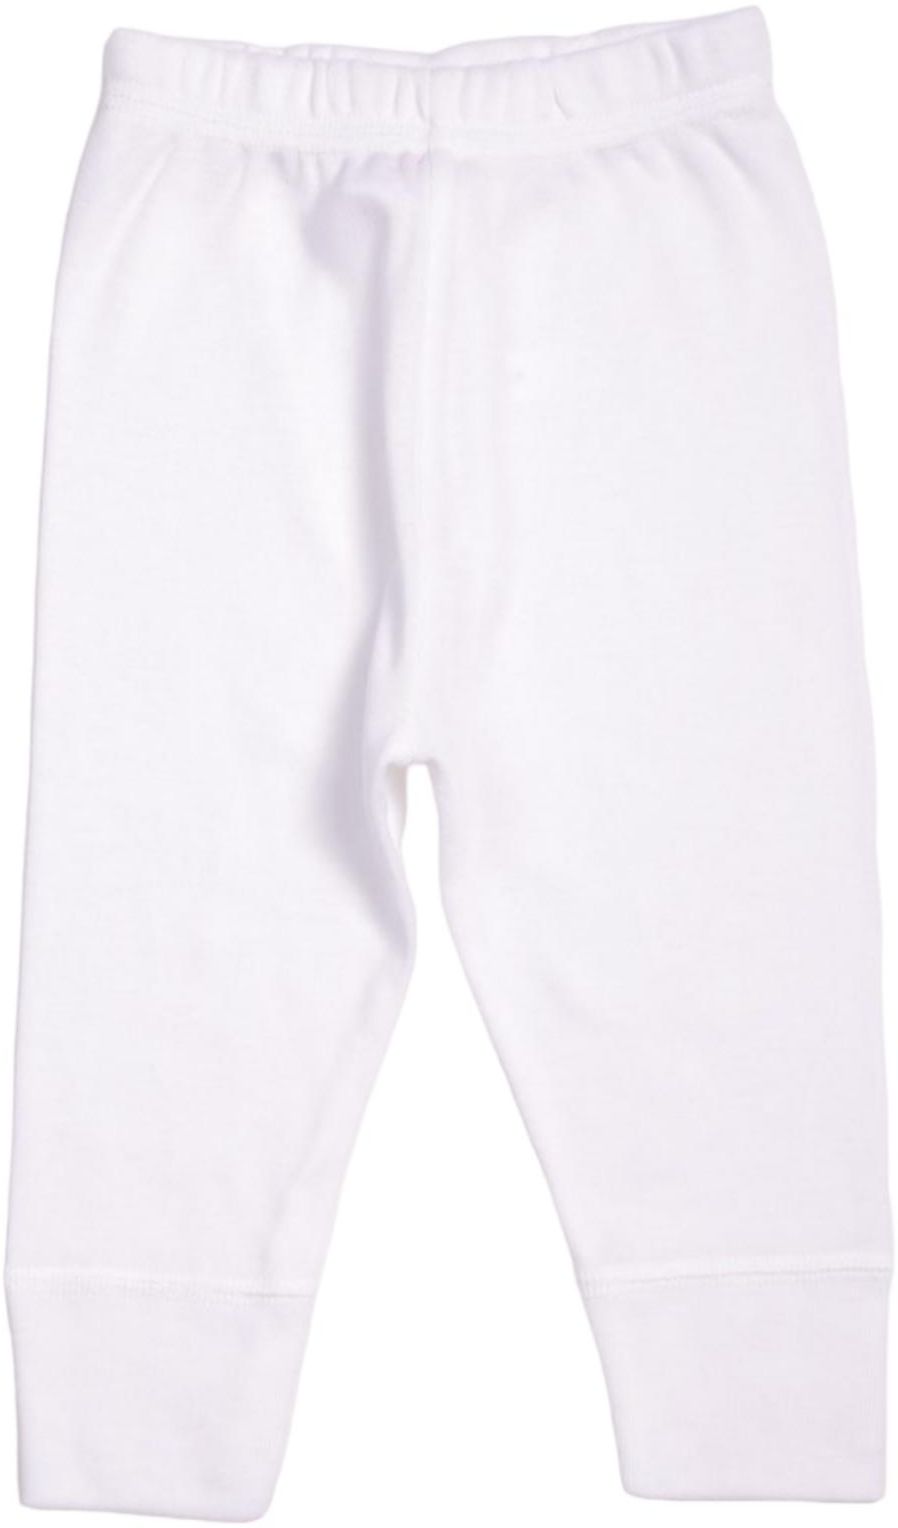 White Thermal Pants